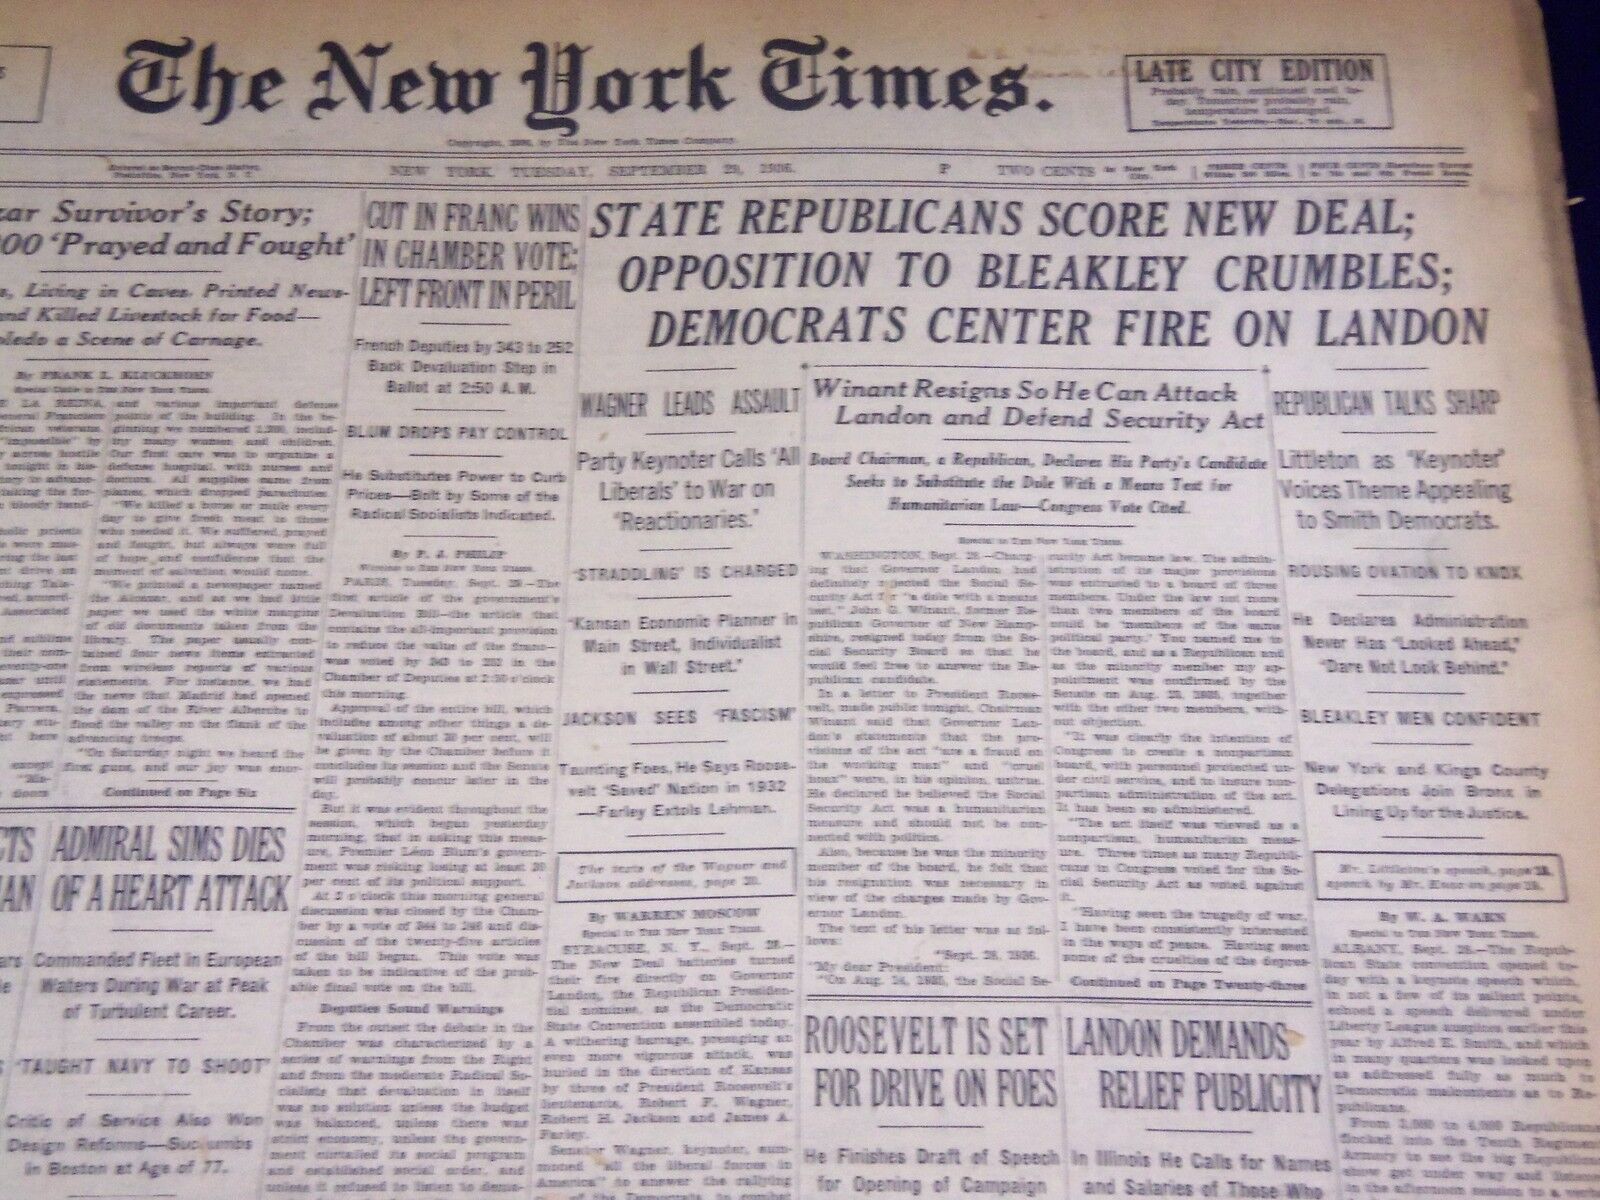 1936 SEPT 29 NEW YORK TIMES - ALCAZAR SURVIVORS STORY, 1,200 PRAYED - NT 2073